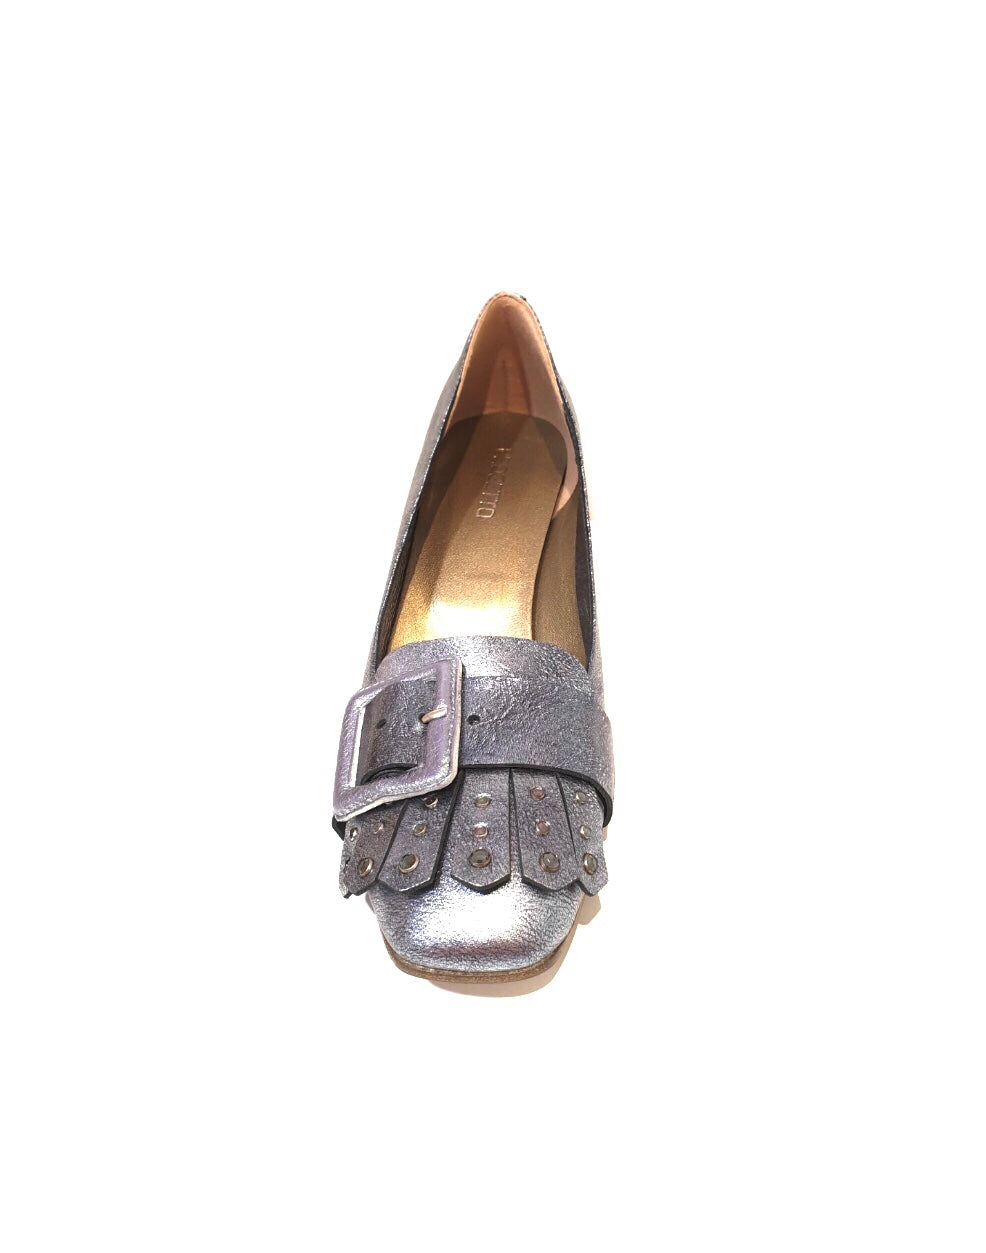 Progetto S161 Rock Cielo Metallic Blue Buckle Tassel Court Shoe Made In Italy